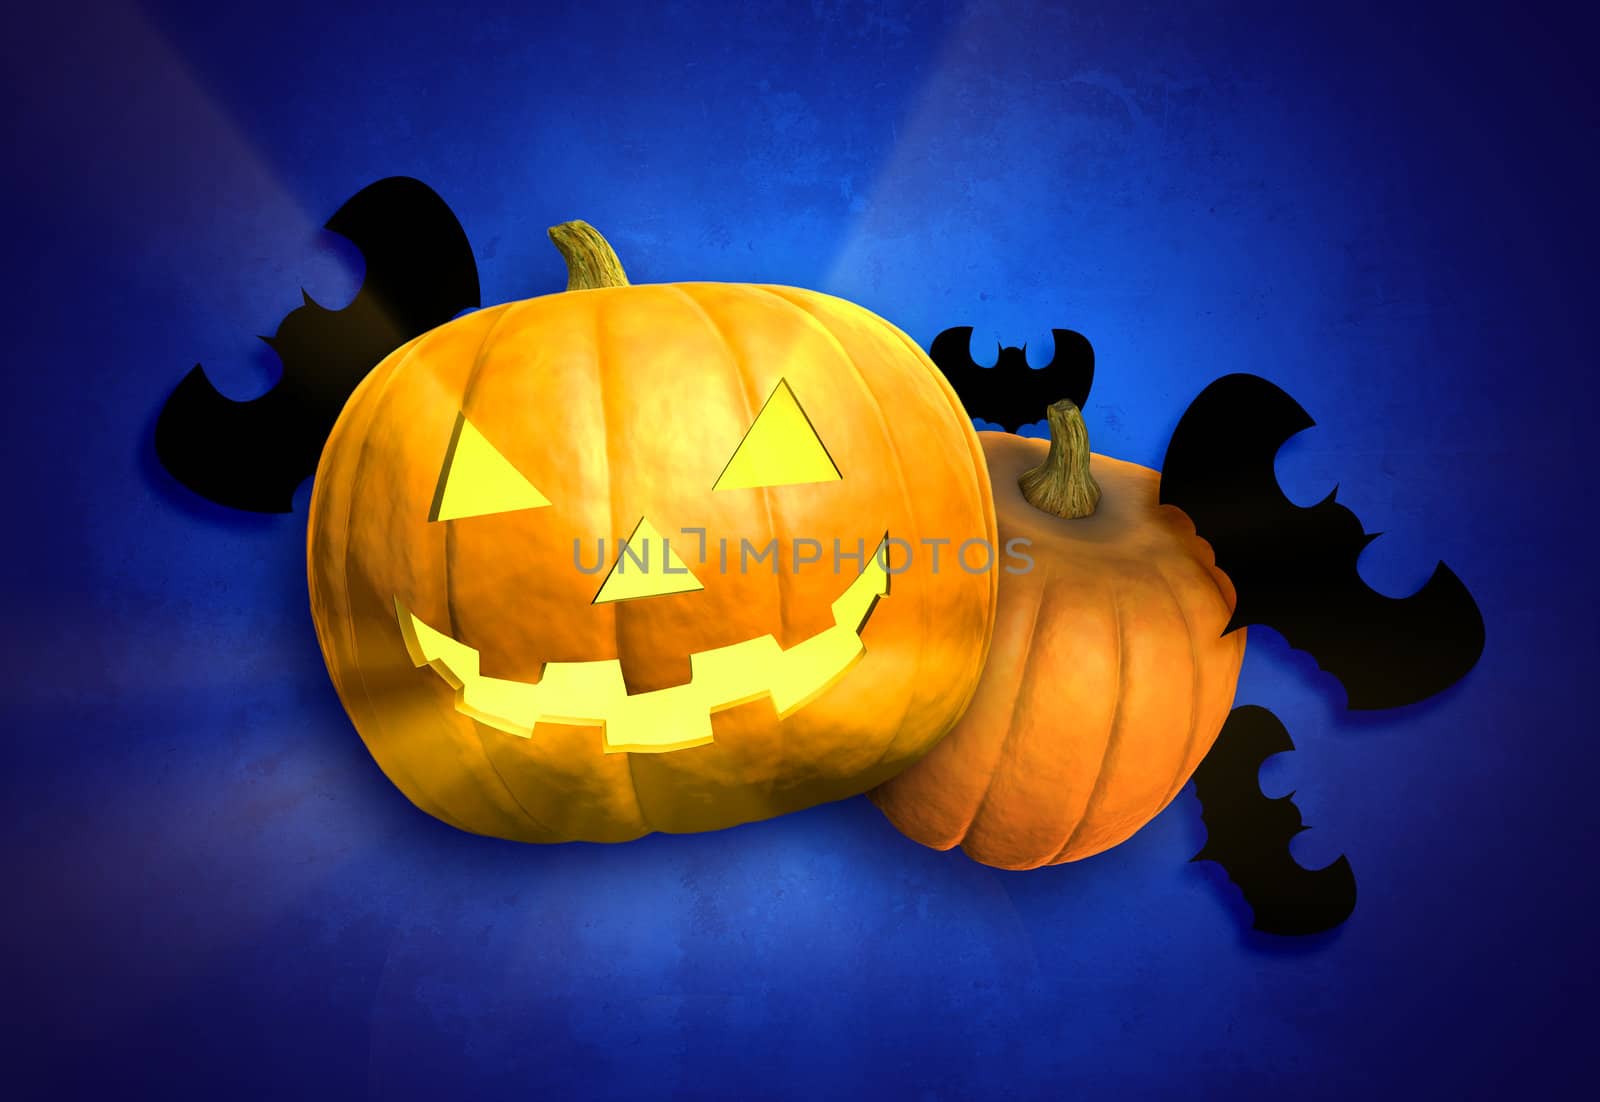 Jack-o-lantern, pumpkin and bat ornaments on blue grungy Halloween background 